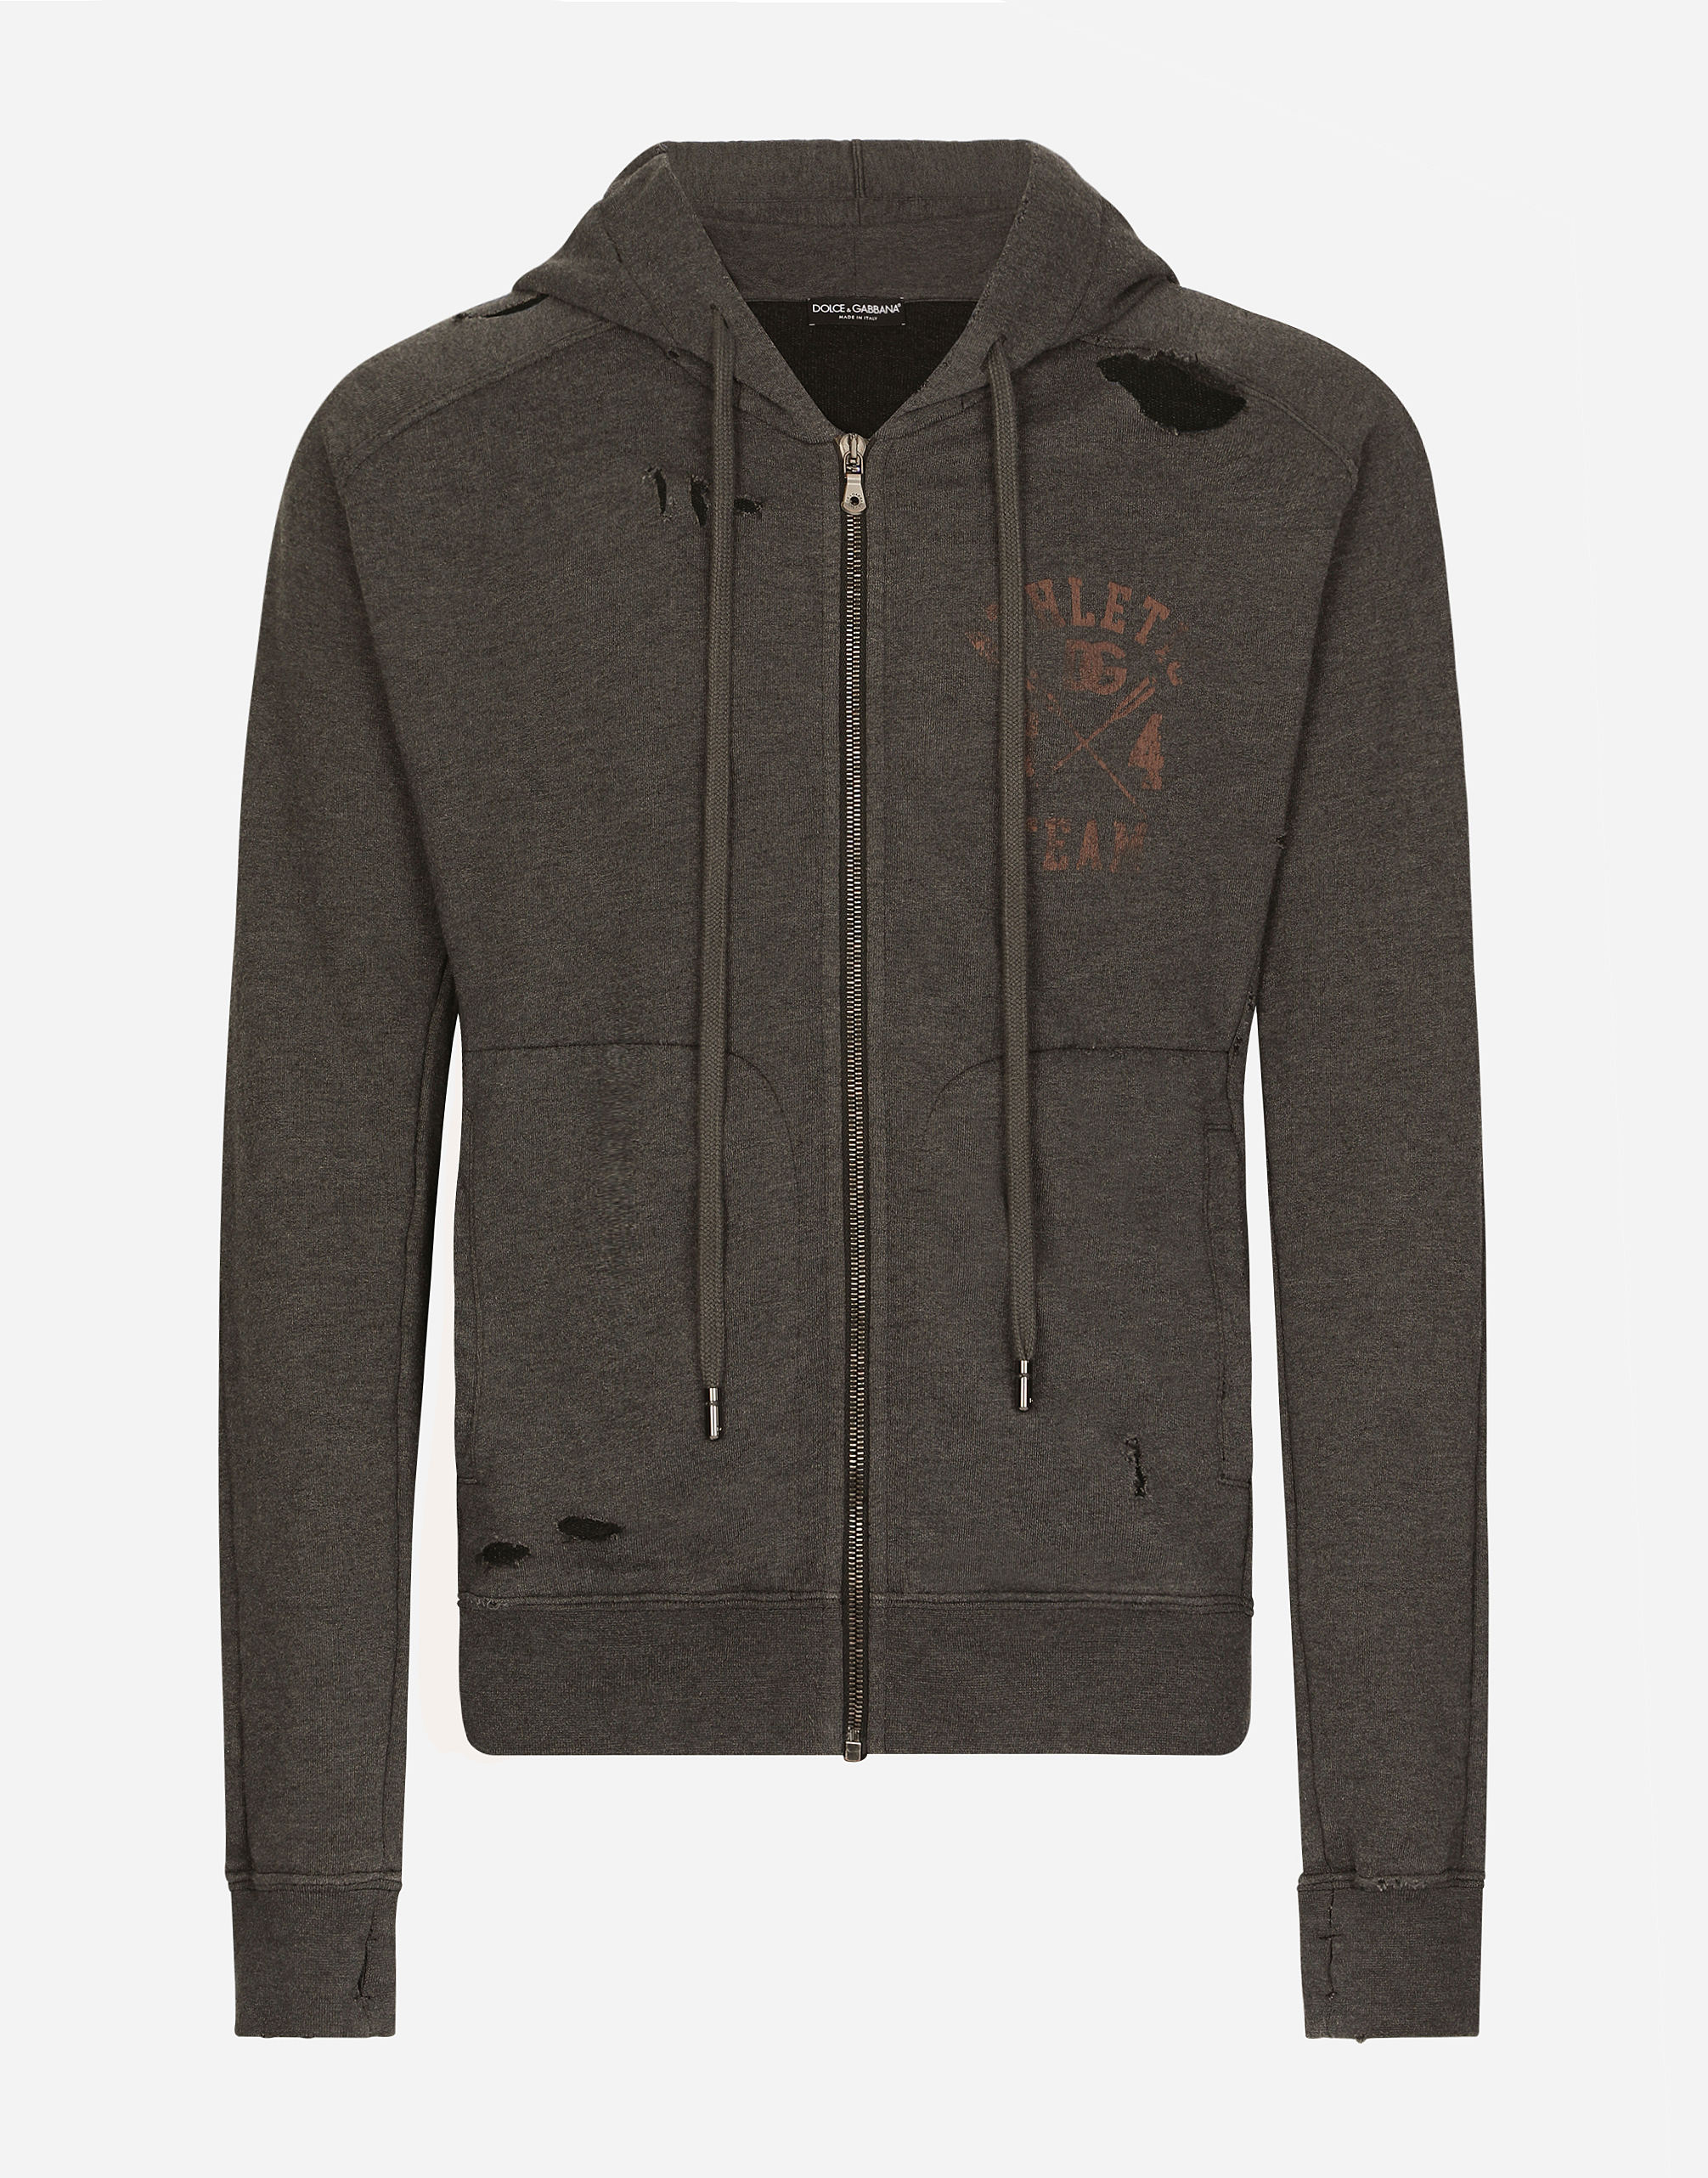 Zip-up jersey hoodie with print